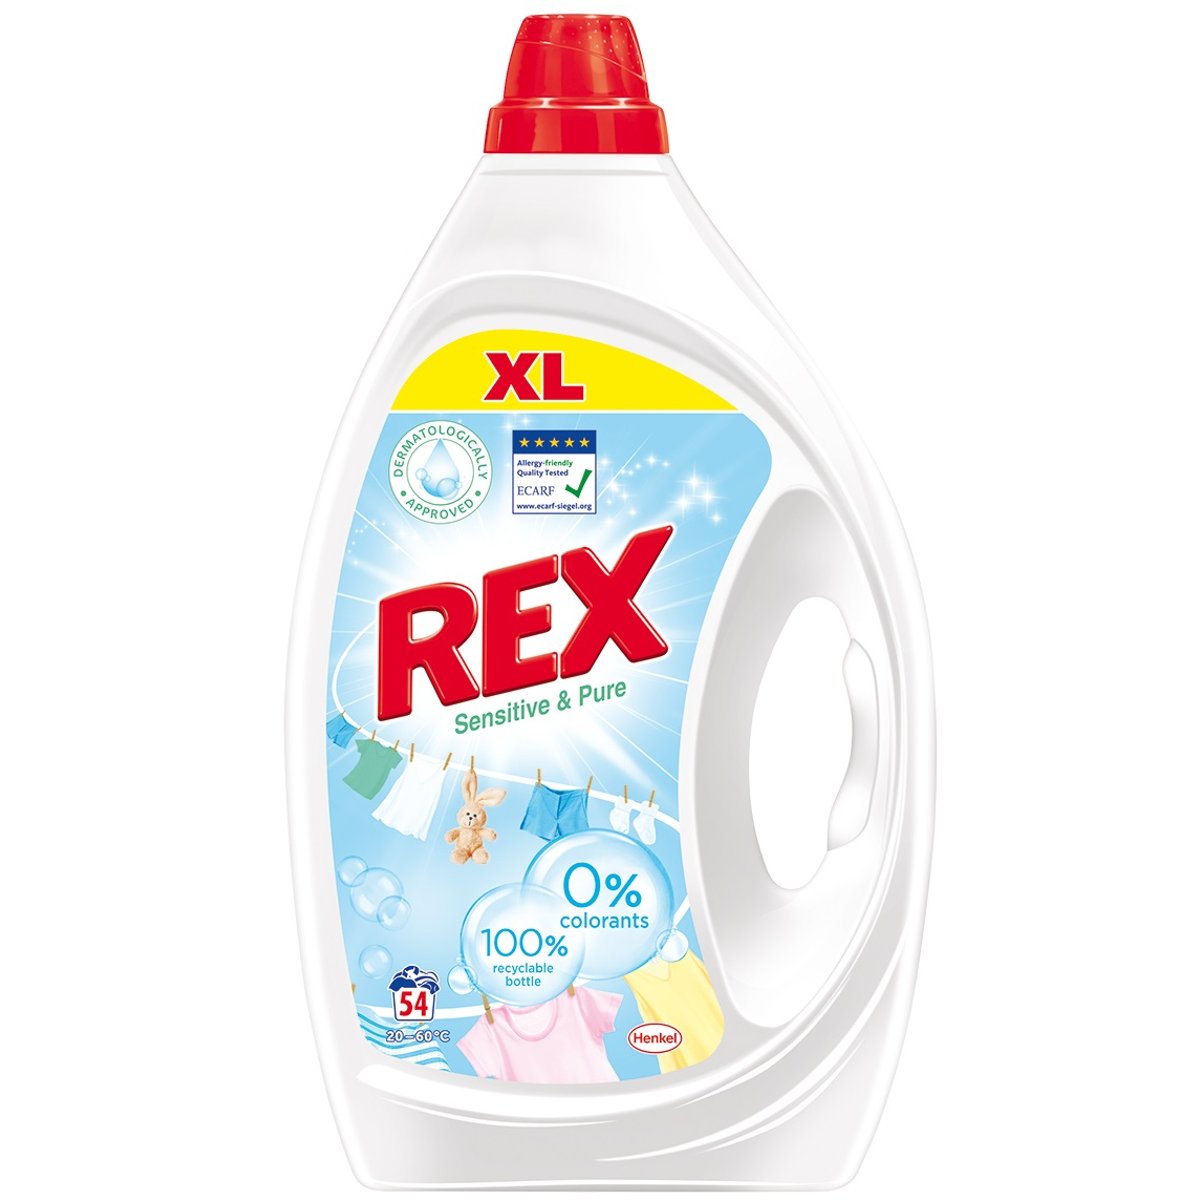 Rex Sensitive & Pure prací gel (2,43 l)